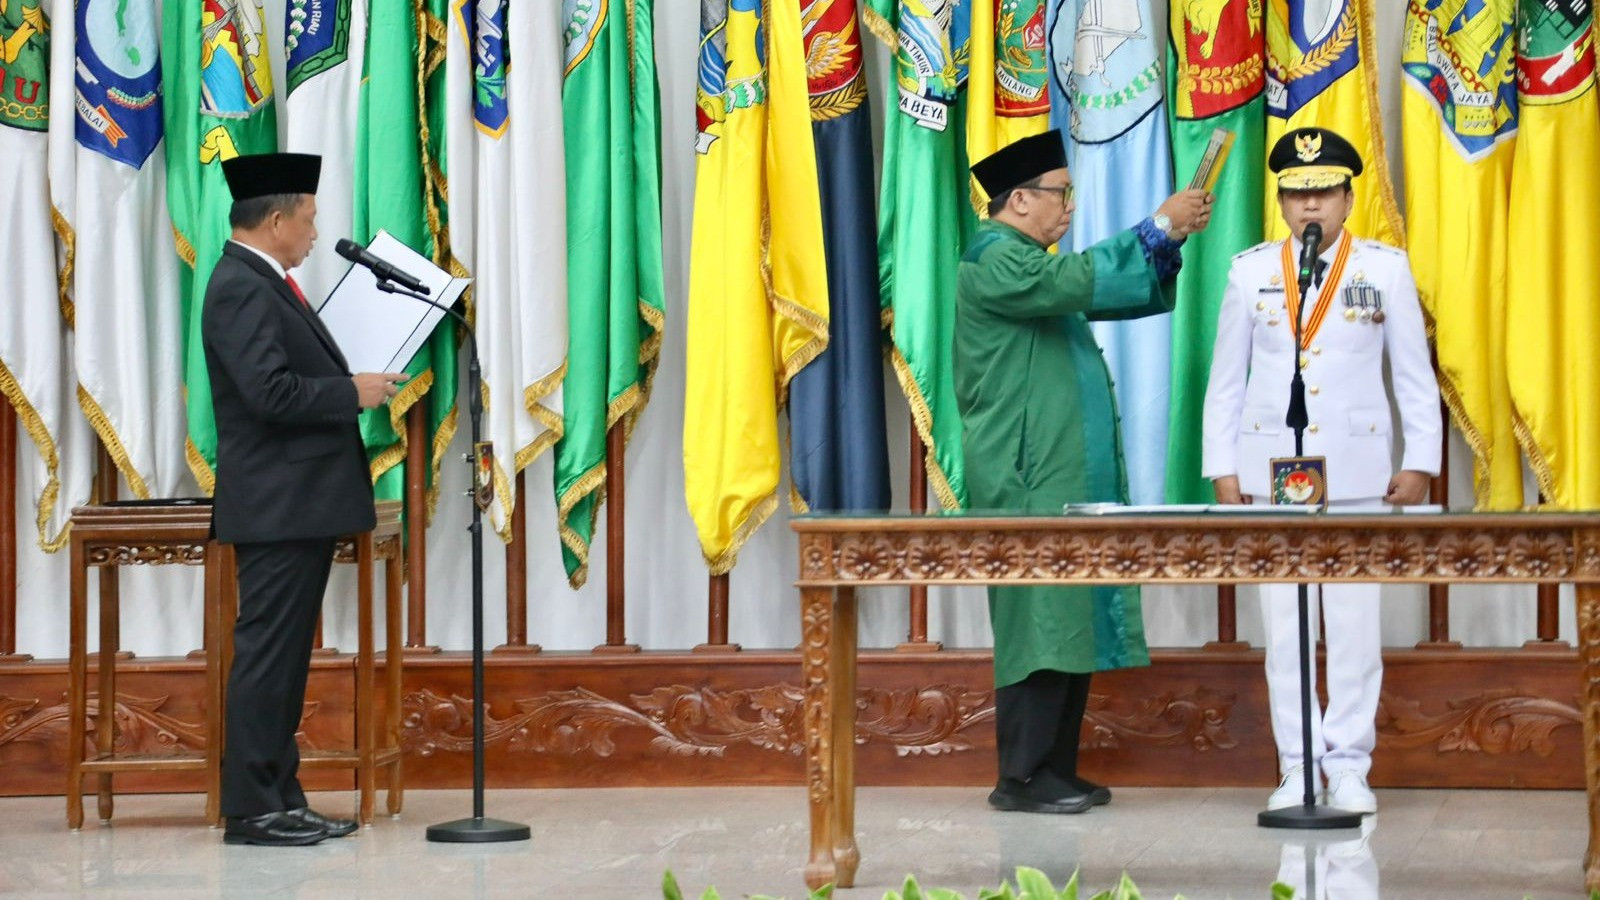 Menteri Dalam Negeri (Mendagri) Muhammad Tito Karnavian melantik Sadali Ie sebagai Penjabat (Pj.) Gubernur Maluku menggantikan Murad Ismail yang berakhir masa jabatannya pada Rabu lalu.